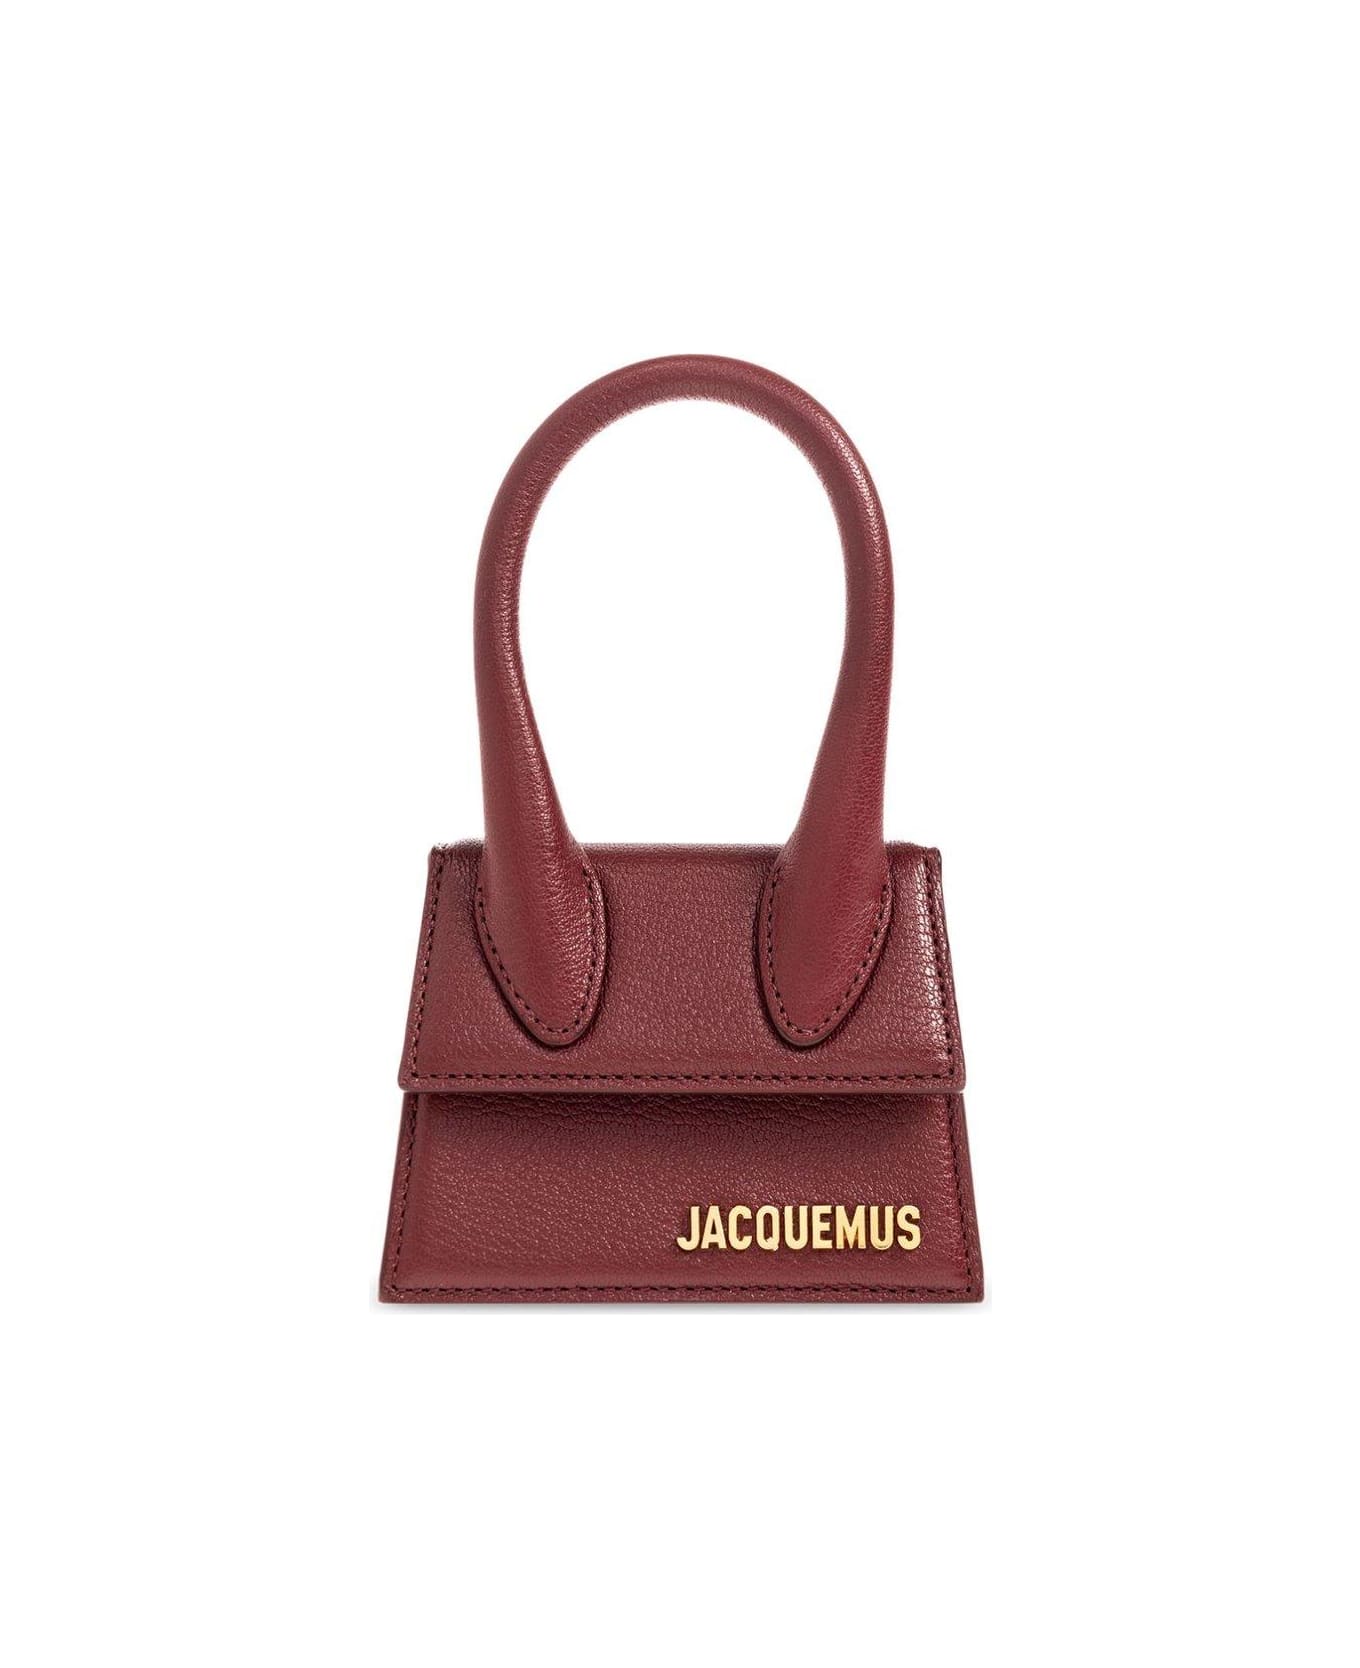 Jacquemus Le Chiquito Shoulder Bag - RED トートバッグ